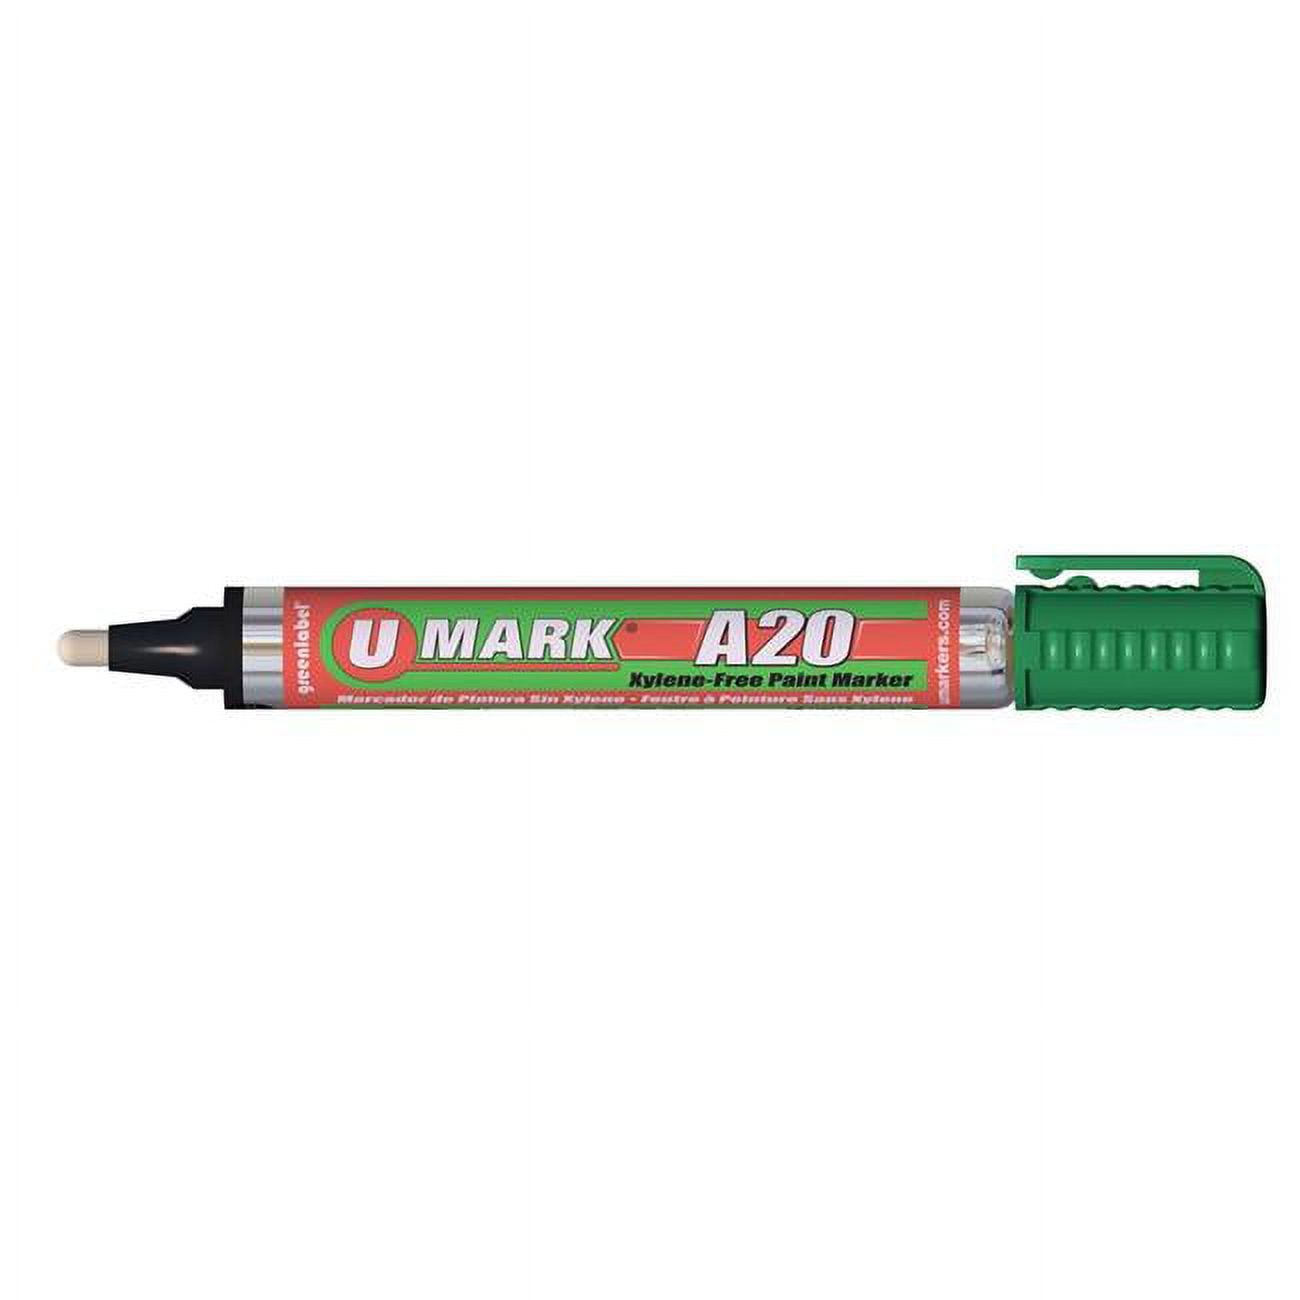 Markal Pro Line Hp Paint Marker